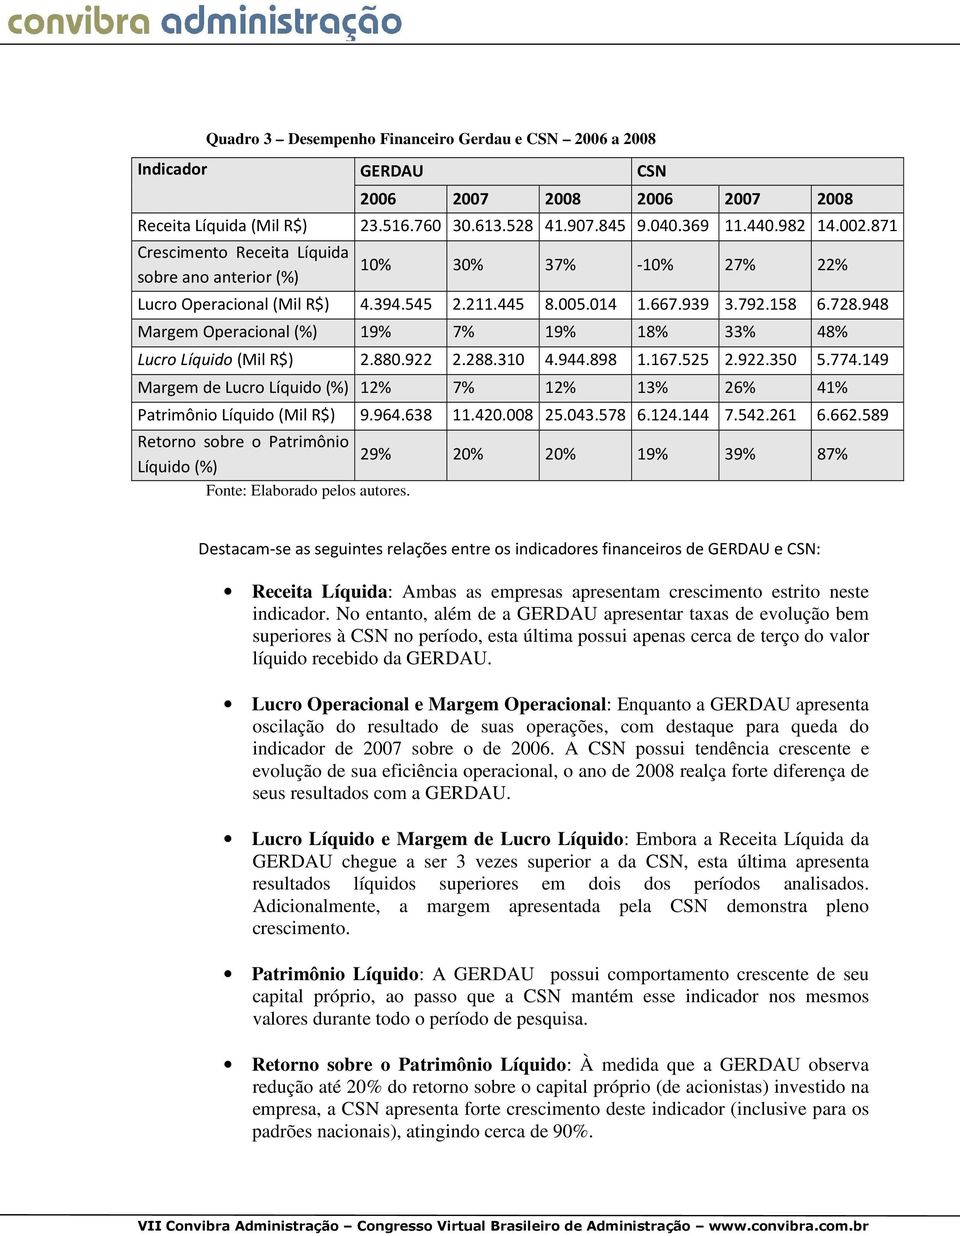 948 Margem Operacional (%) 19% 7% 19% 18% 33% 48% Lucro Líquido (Mil R$) 2.880.922 2.288.310 4.944.898 1.167.525 2.922.350 5.774.